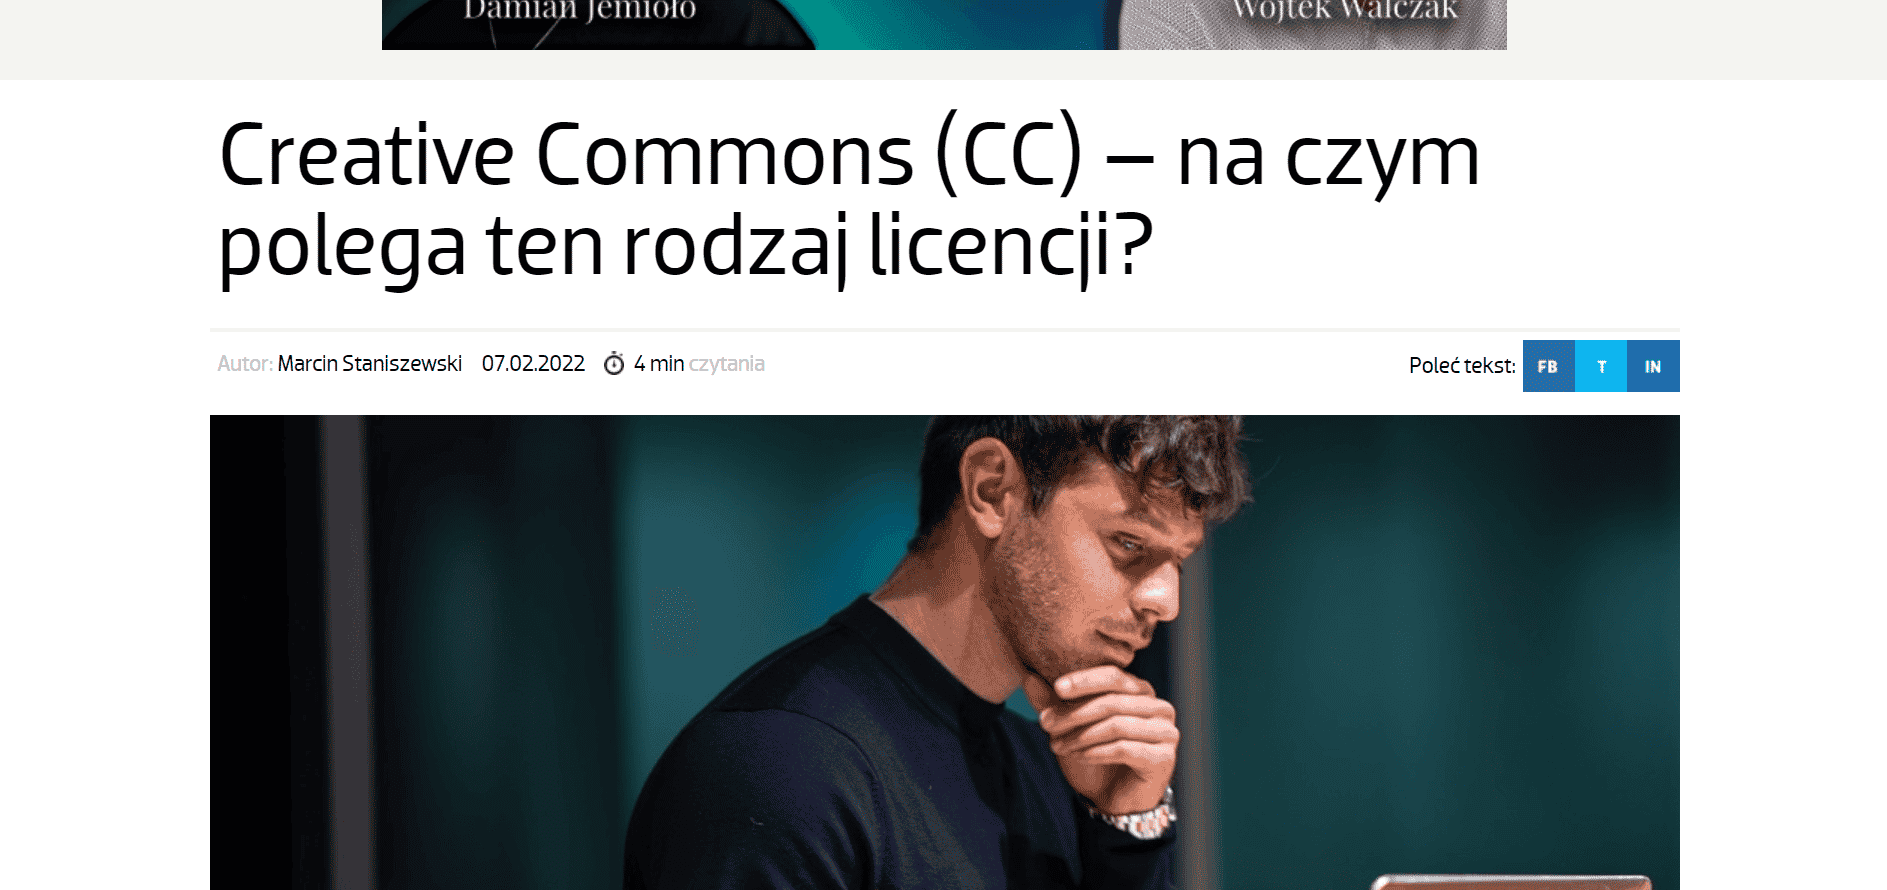 Creative Commons (CC) – na czym polega ten rodzaj licencji